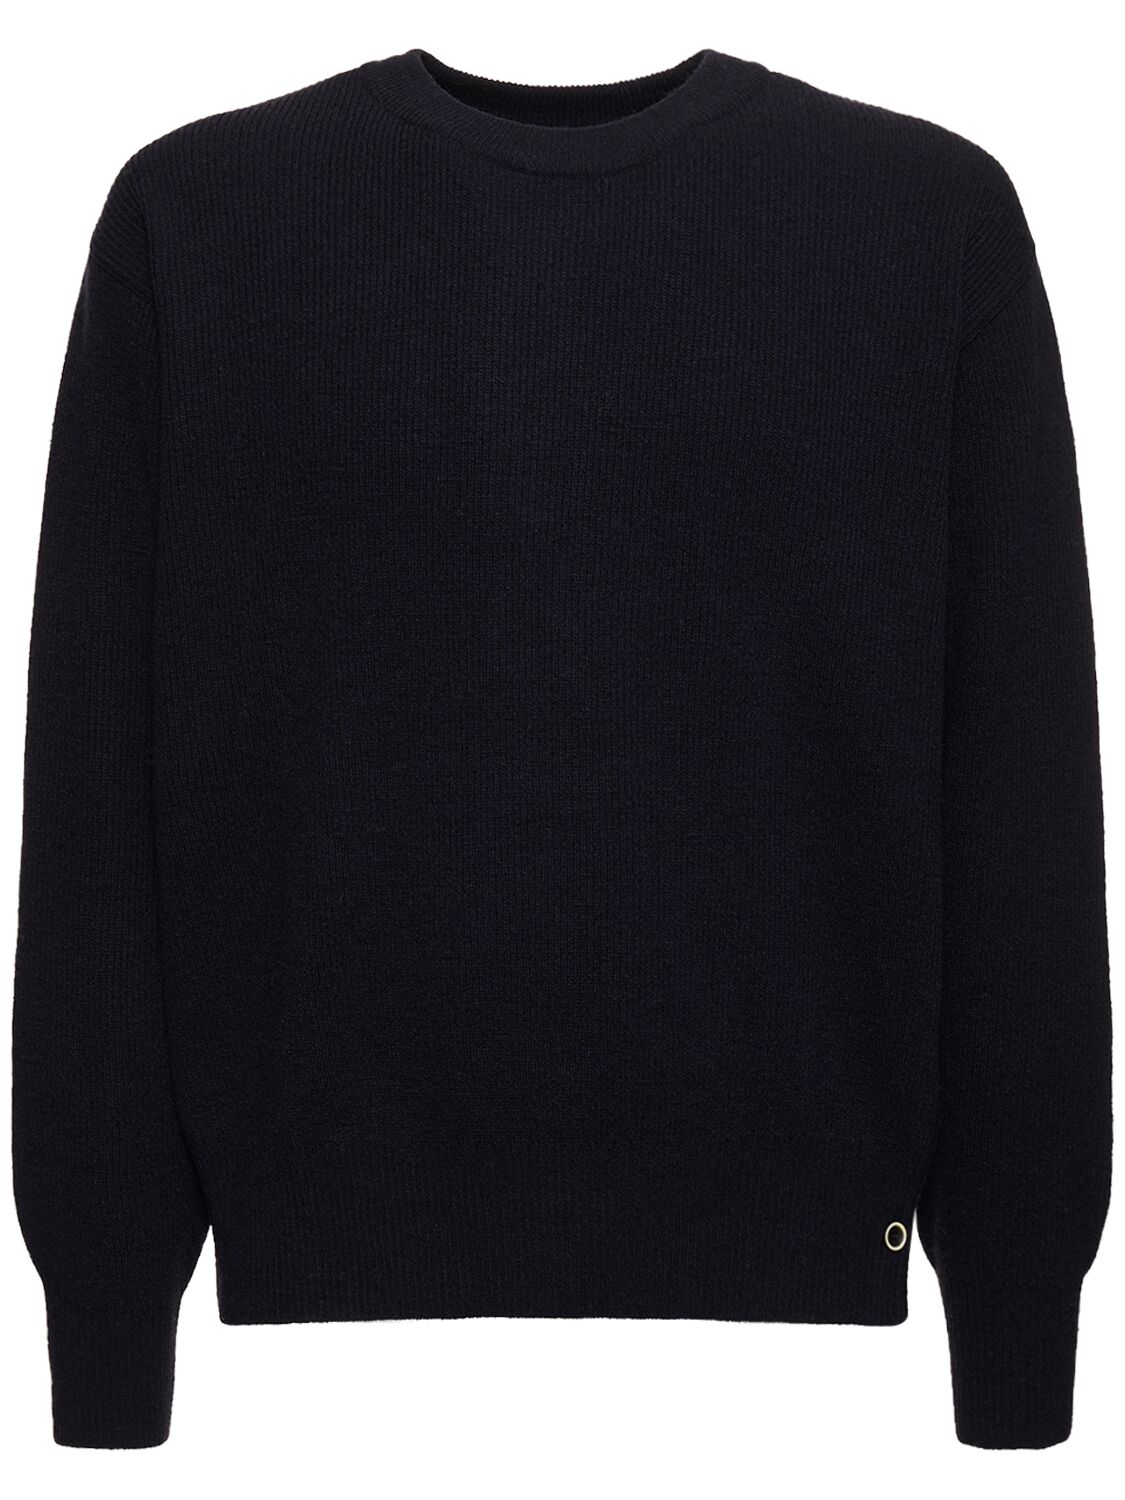 Image of Buttoned Crewneck Unisex Sweater